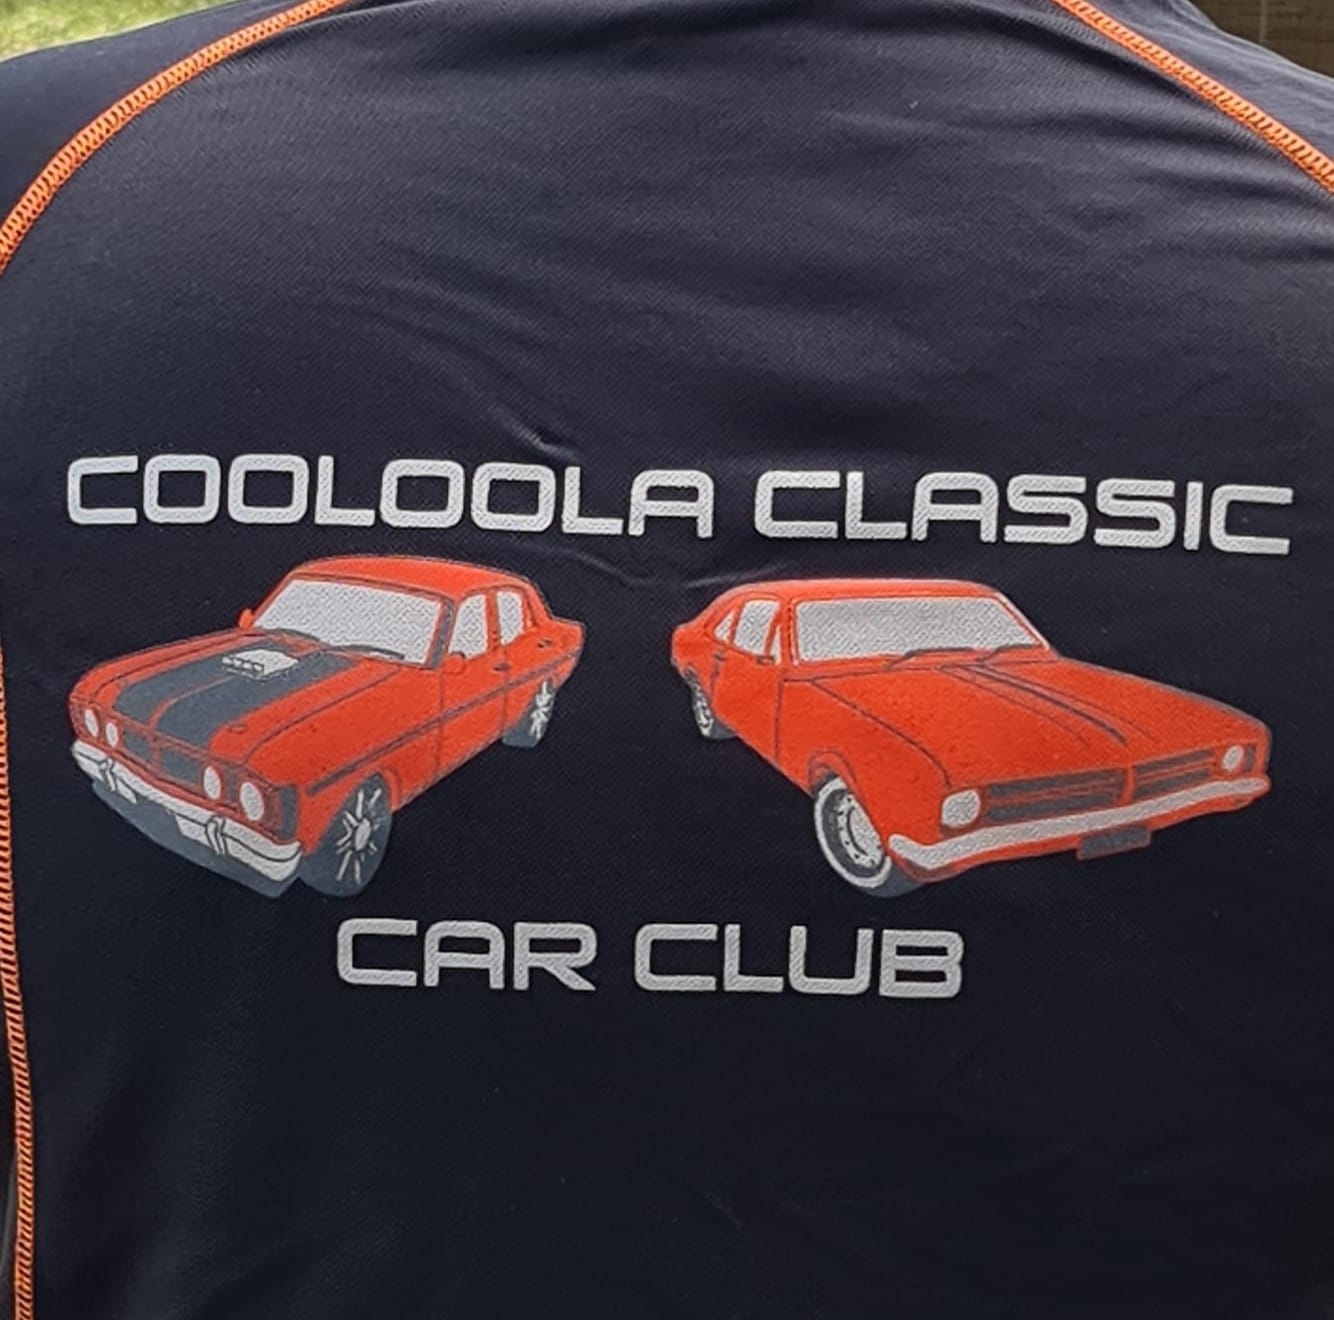 Cooloola Classic Car Club